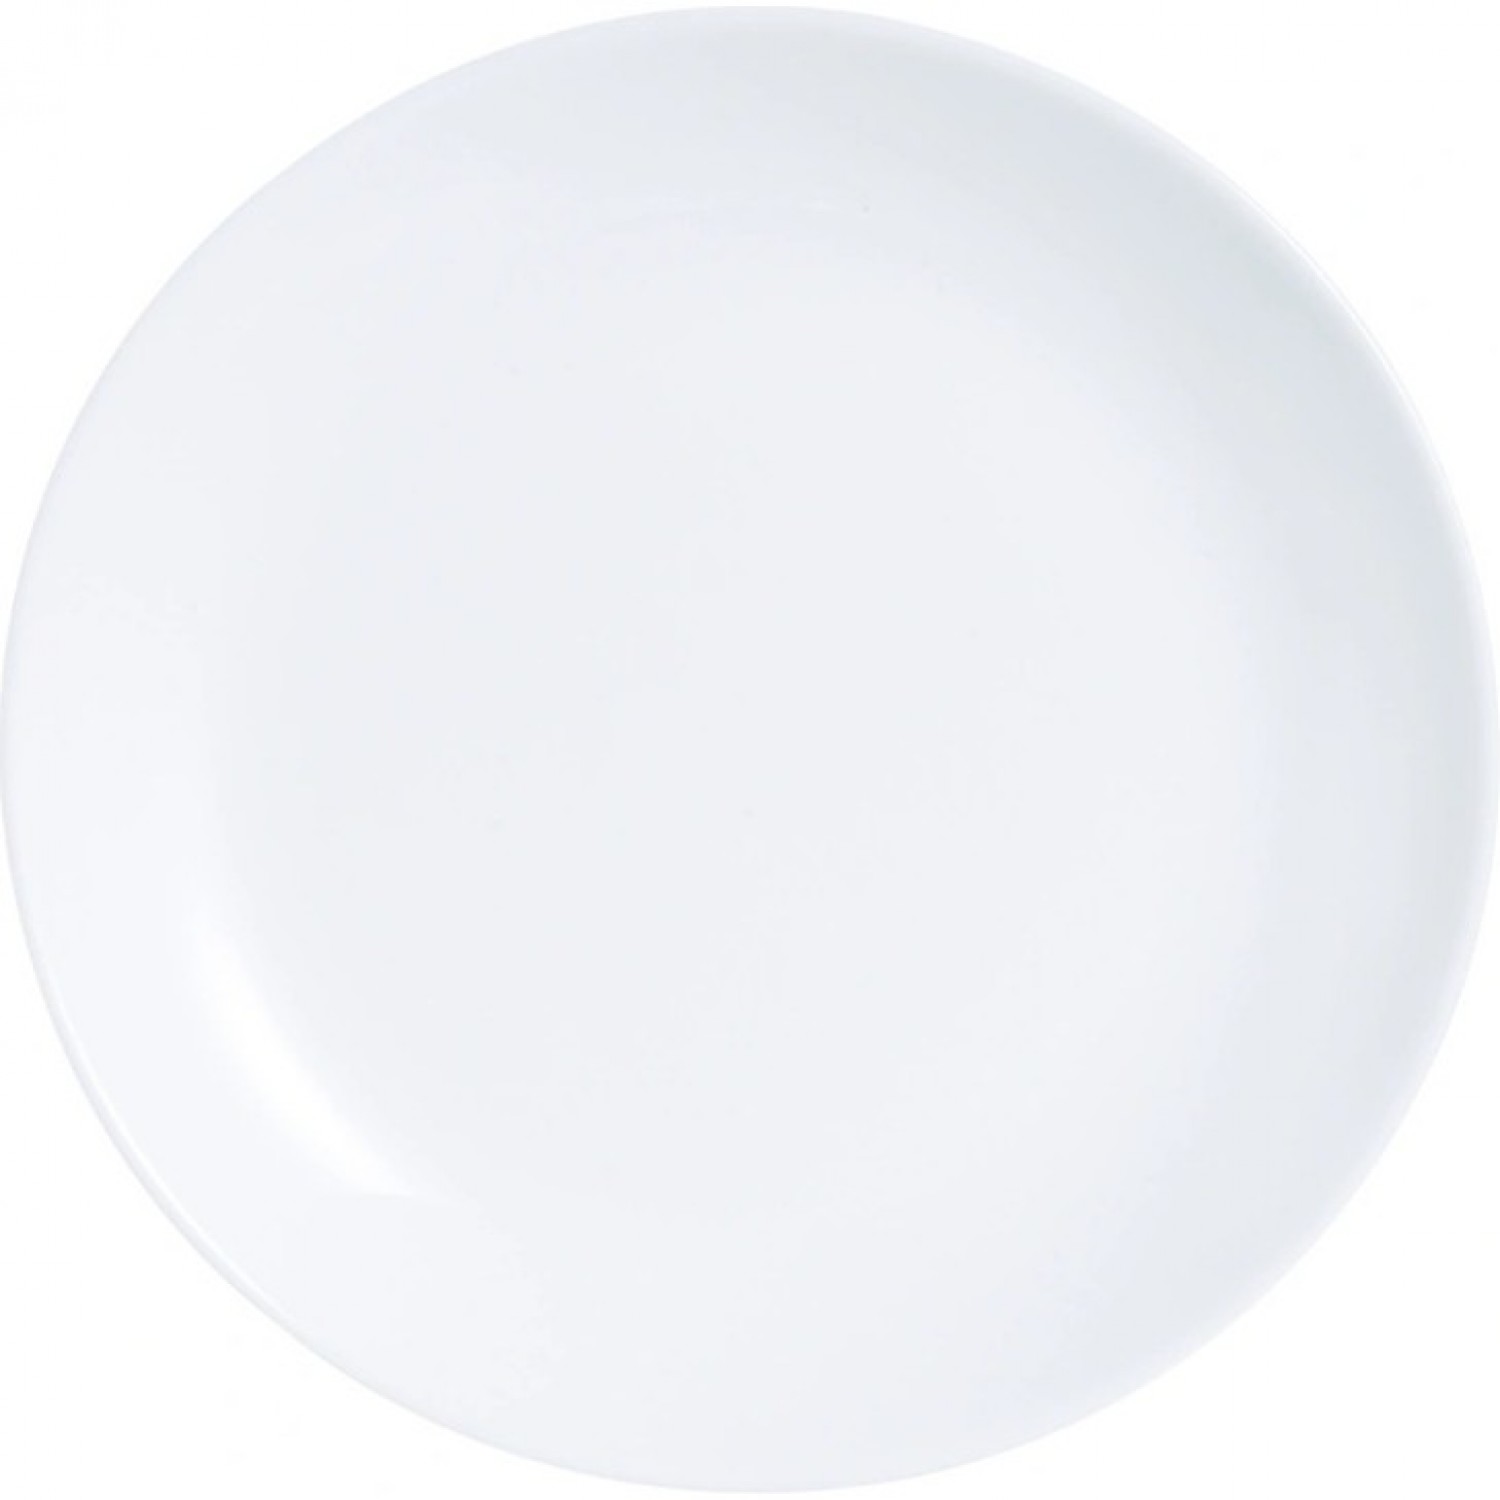 Тарелка обеденная ДИВАЛИ 25см LUMINARC D6905 (P3299) тарелка обеденная дивали 27см luminarc p6040